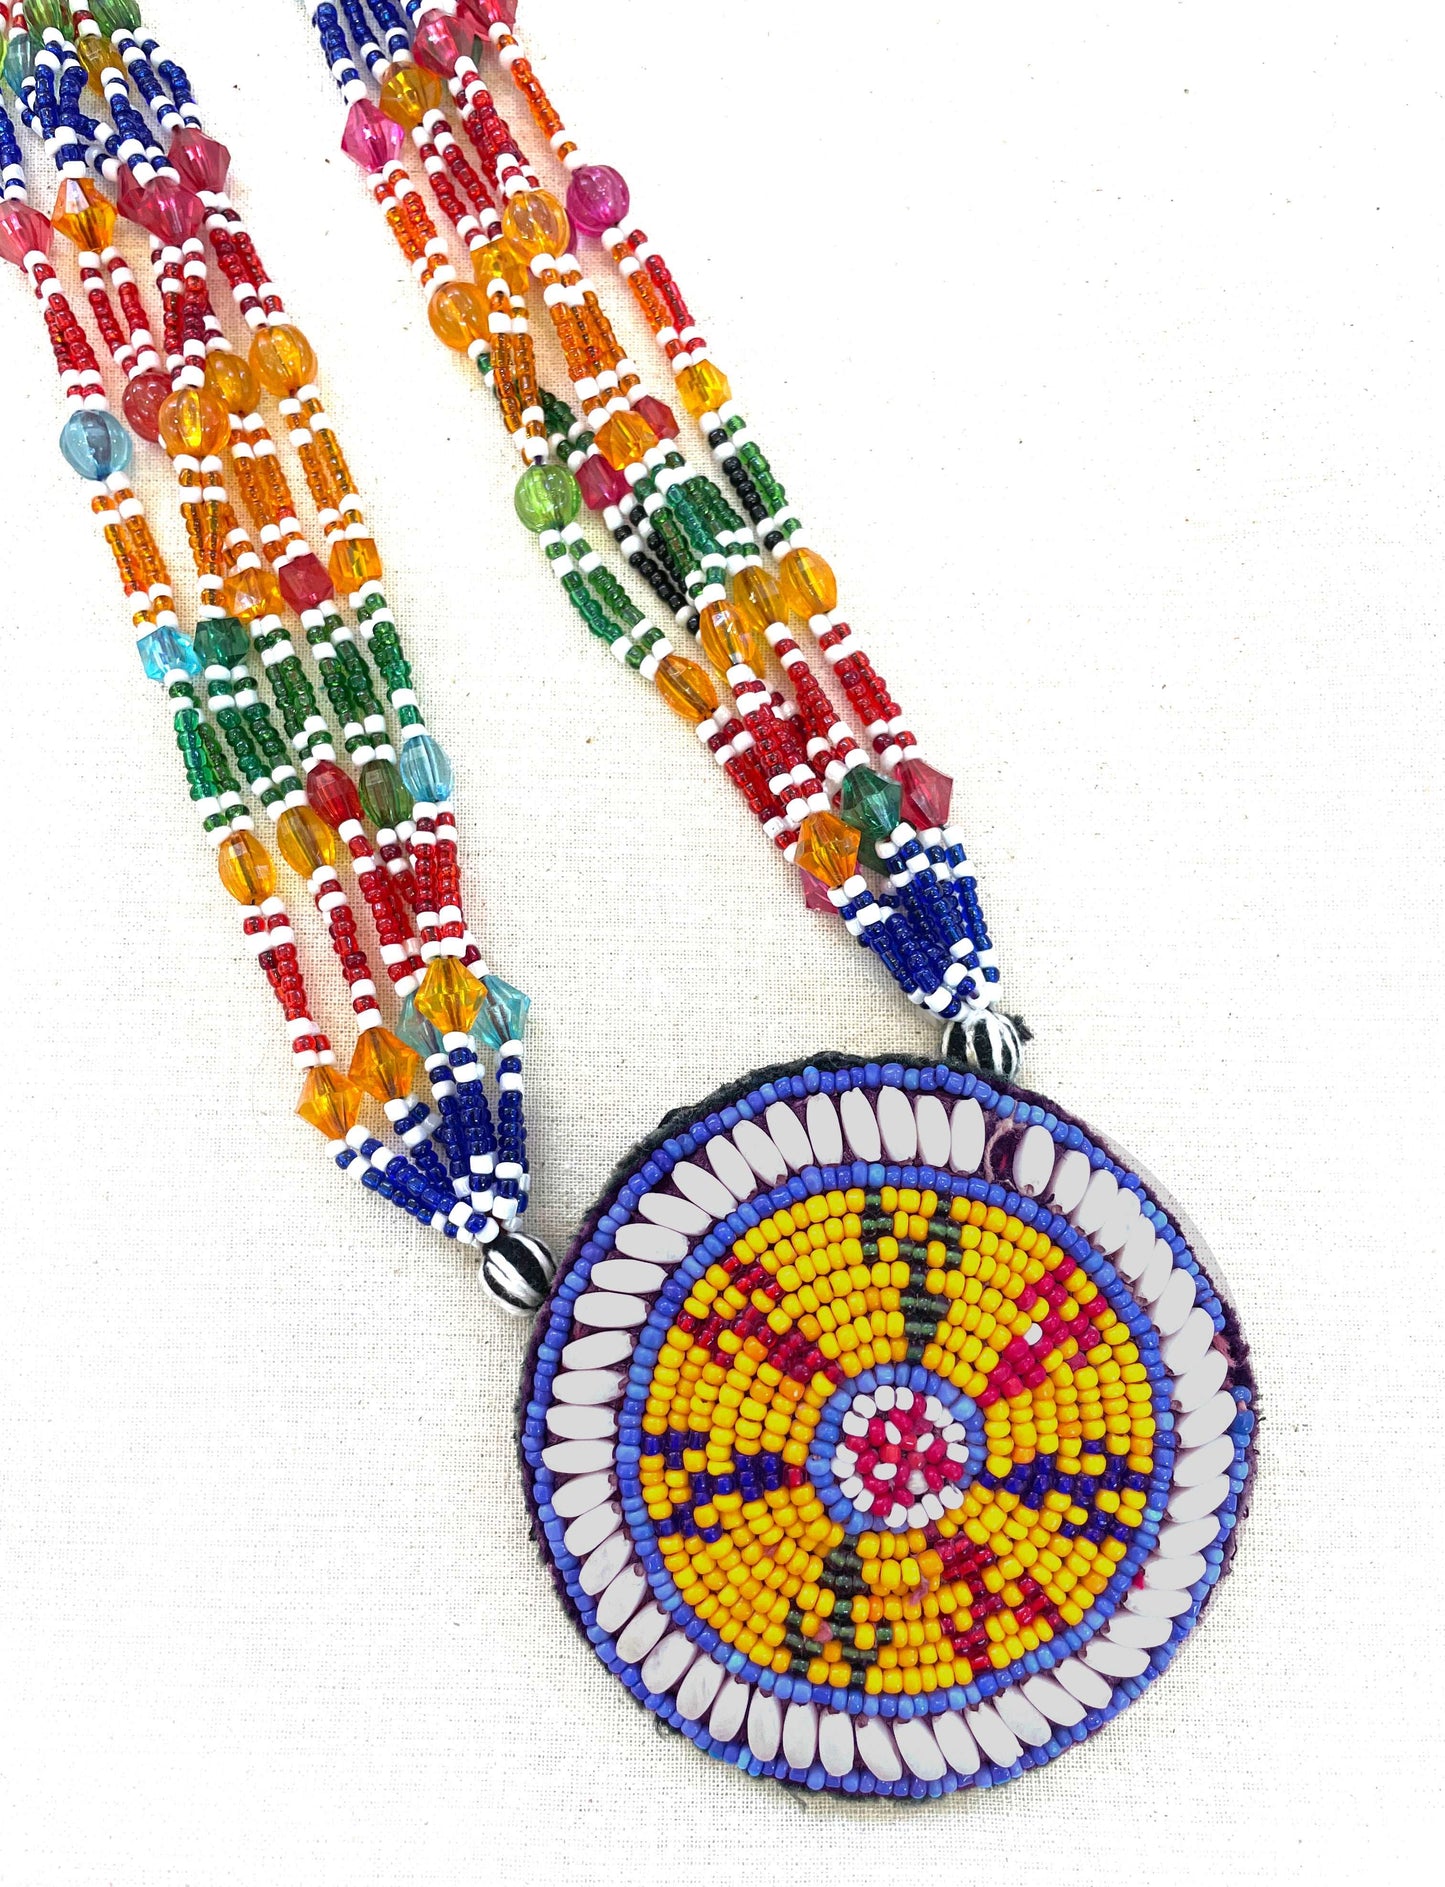 Kutchi beadwork necklace - Aesthetics Designer Label